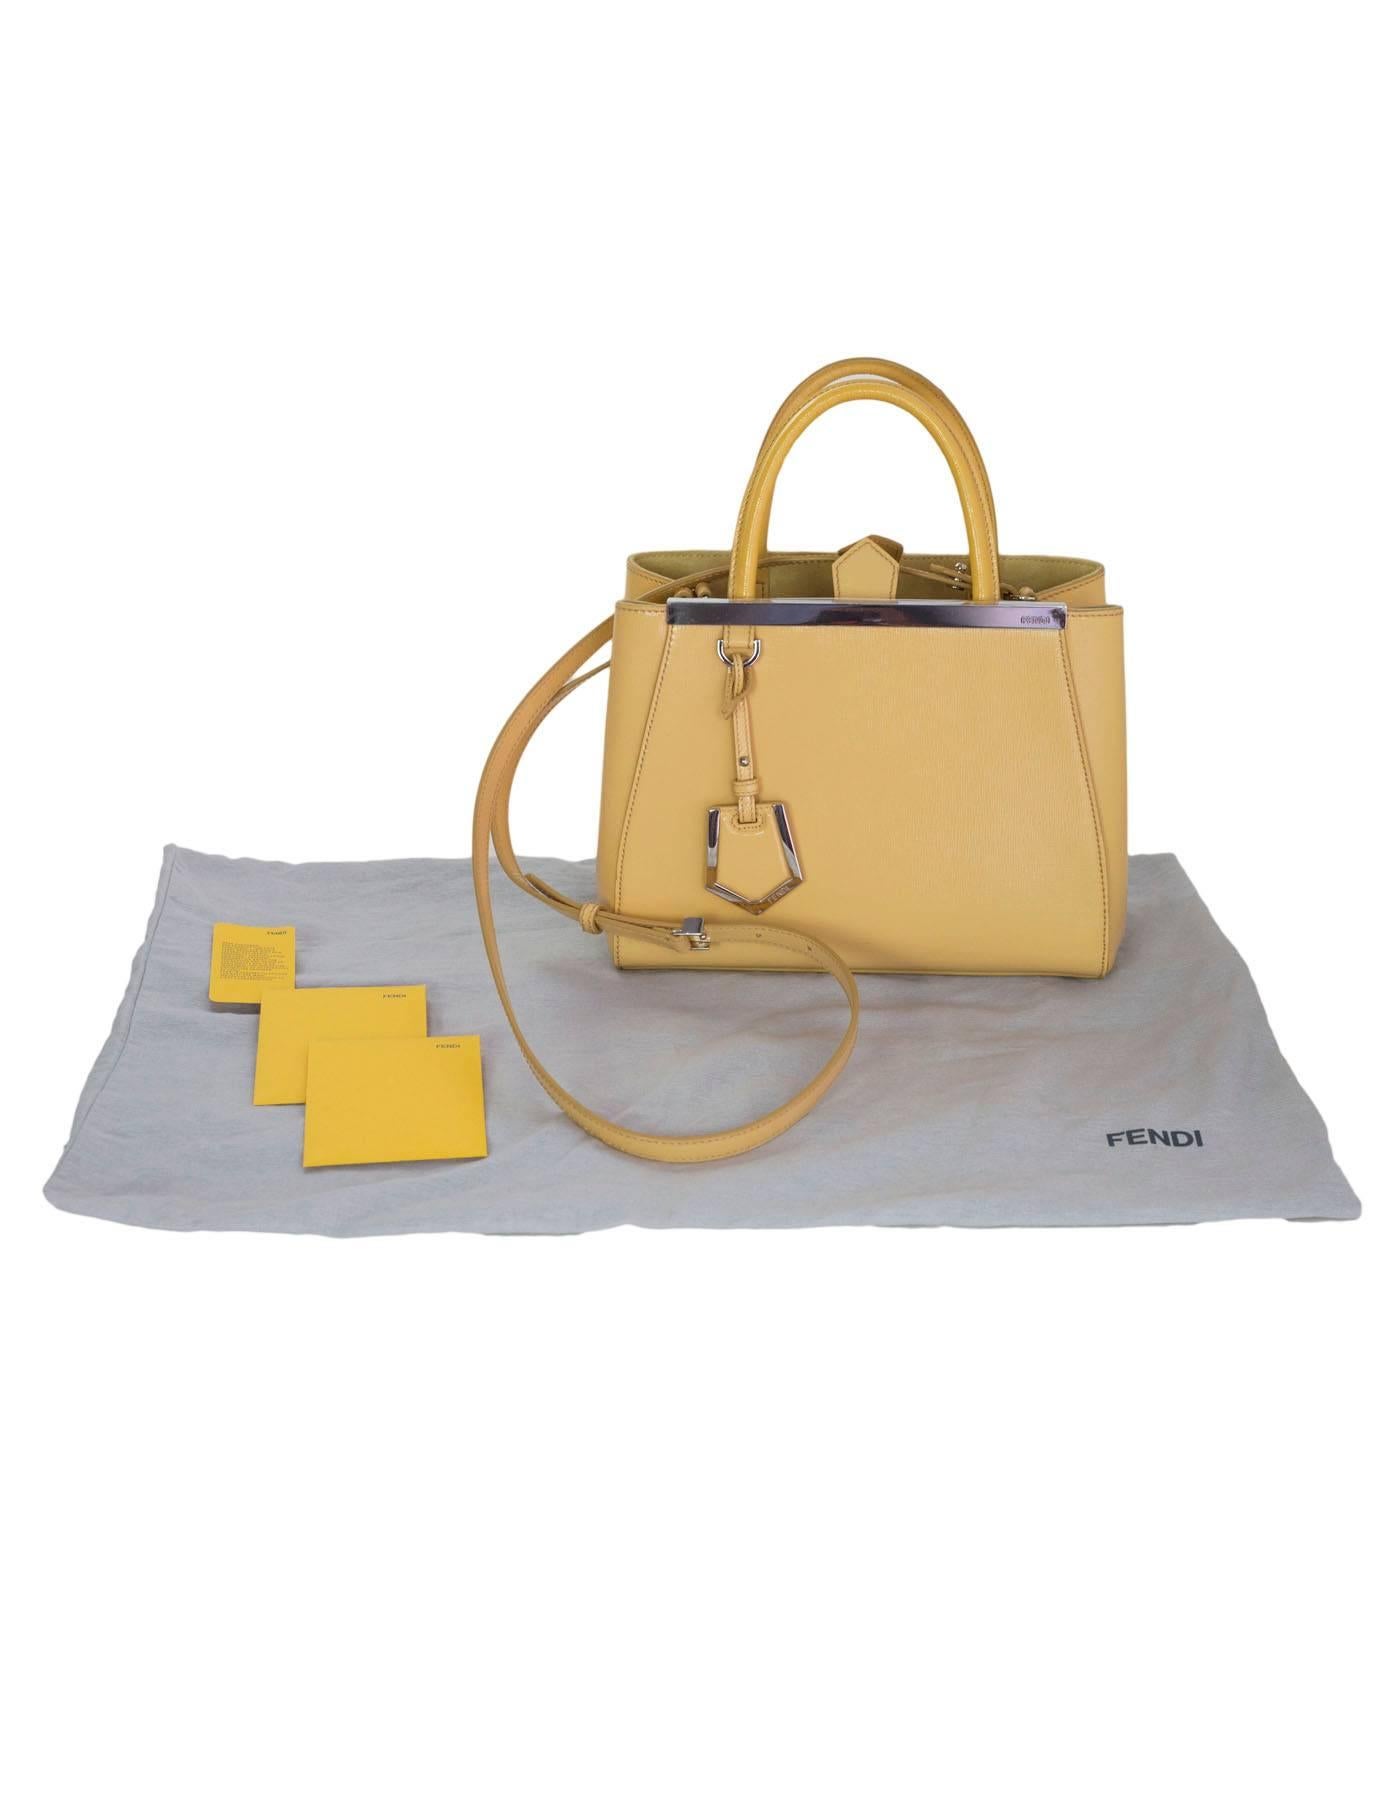 Fendi Yellow Patent Leather Petite 2Jours Satchel Crossbody Bag 6